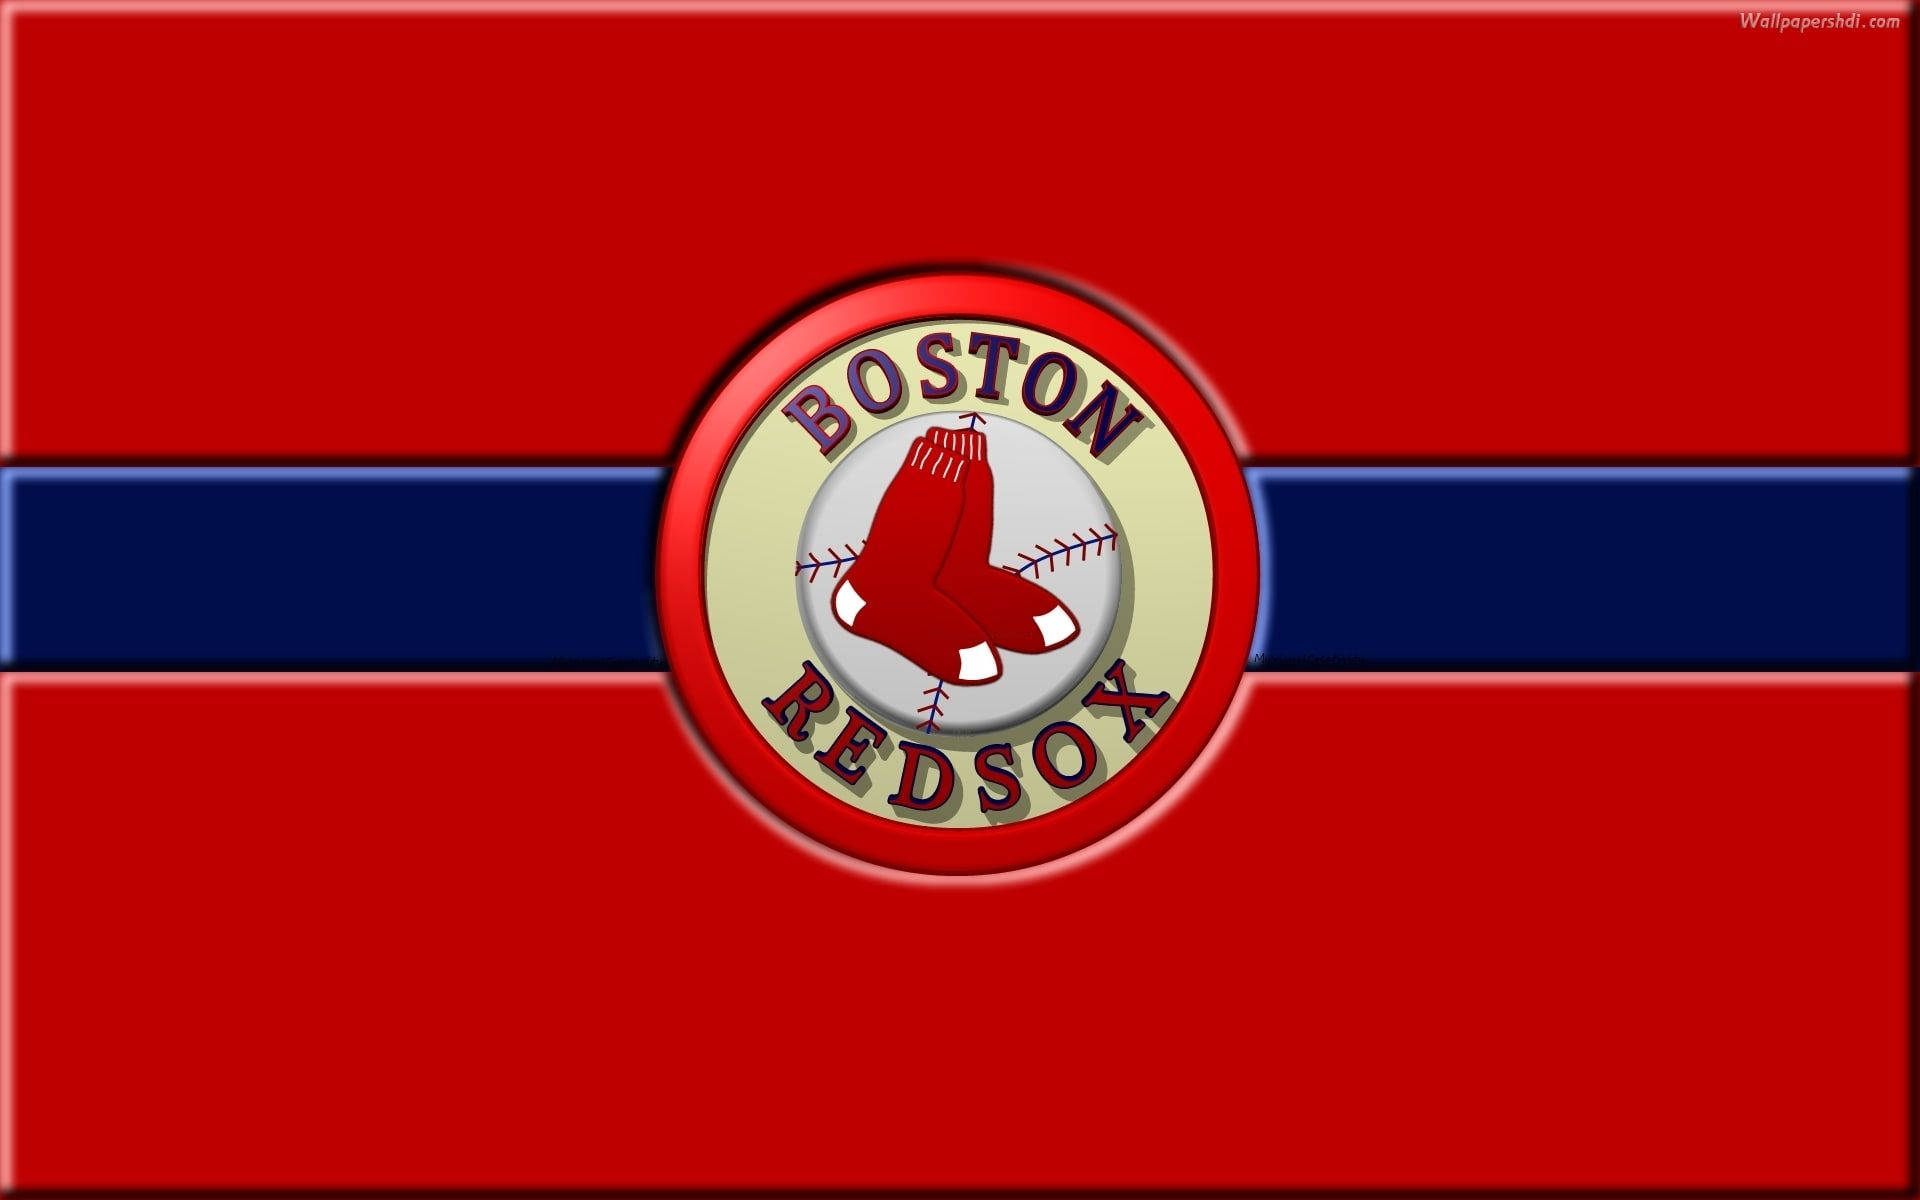 Boston Red Sox Baseball Team Background